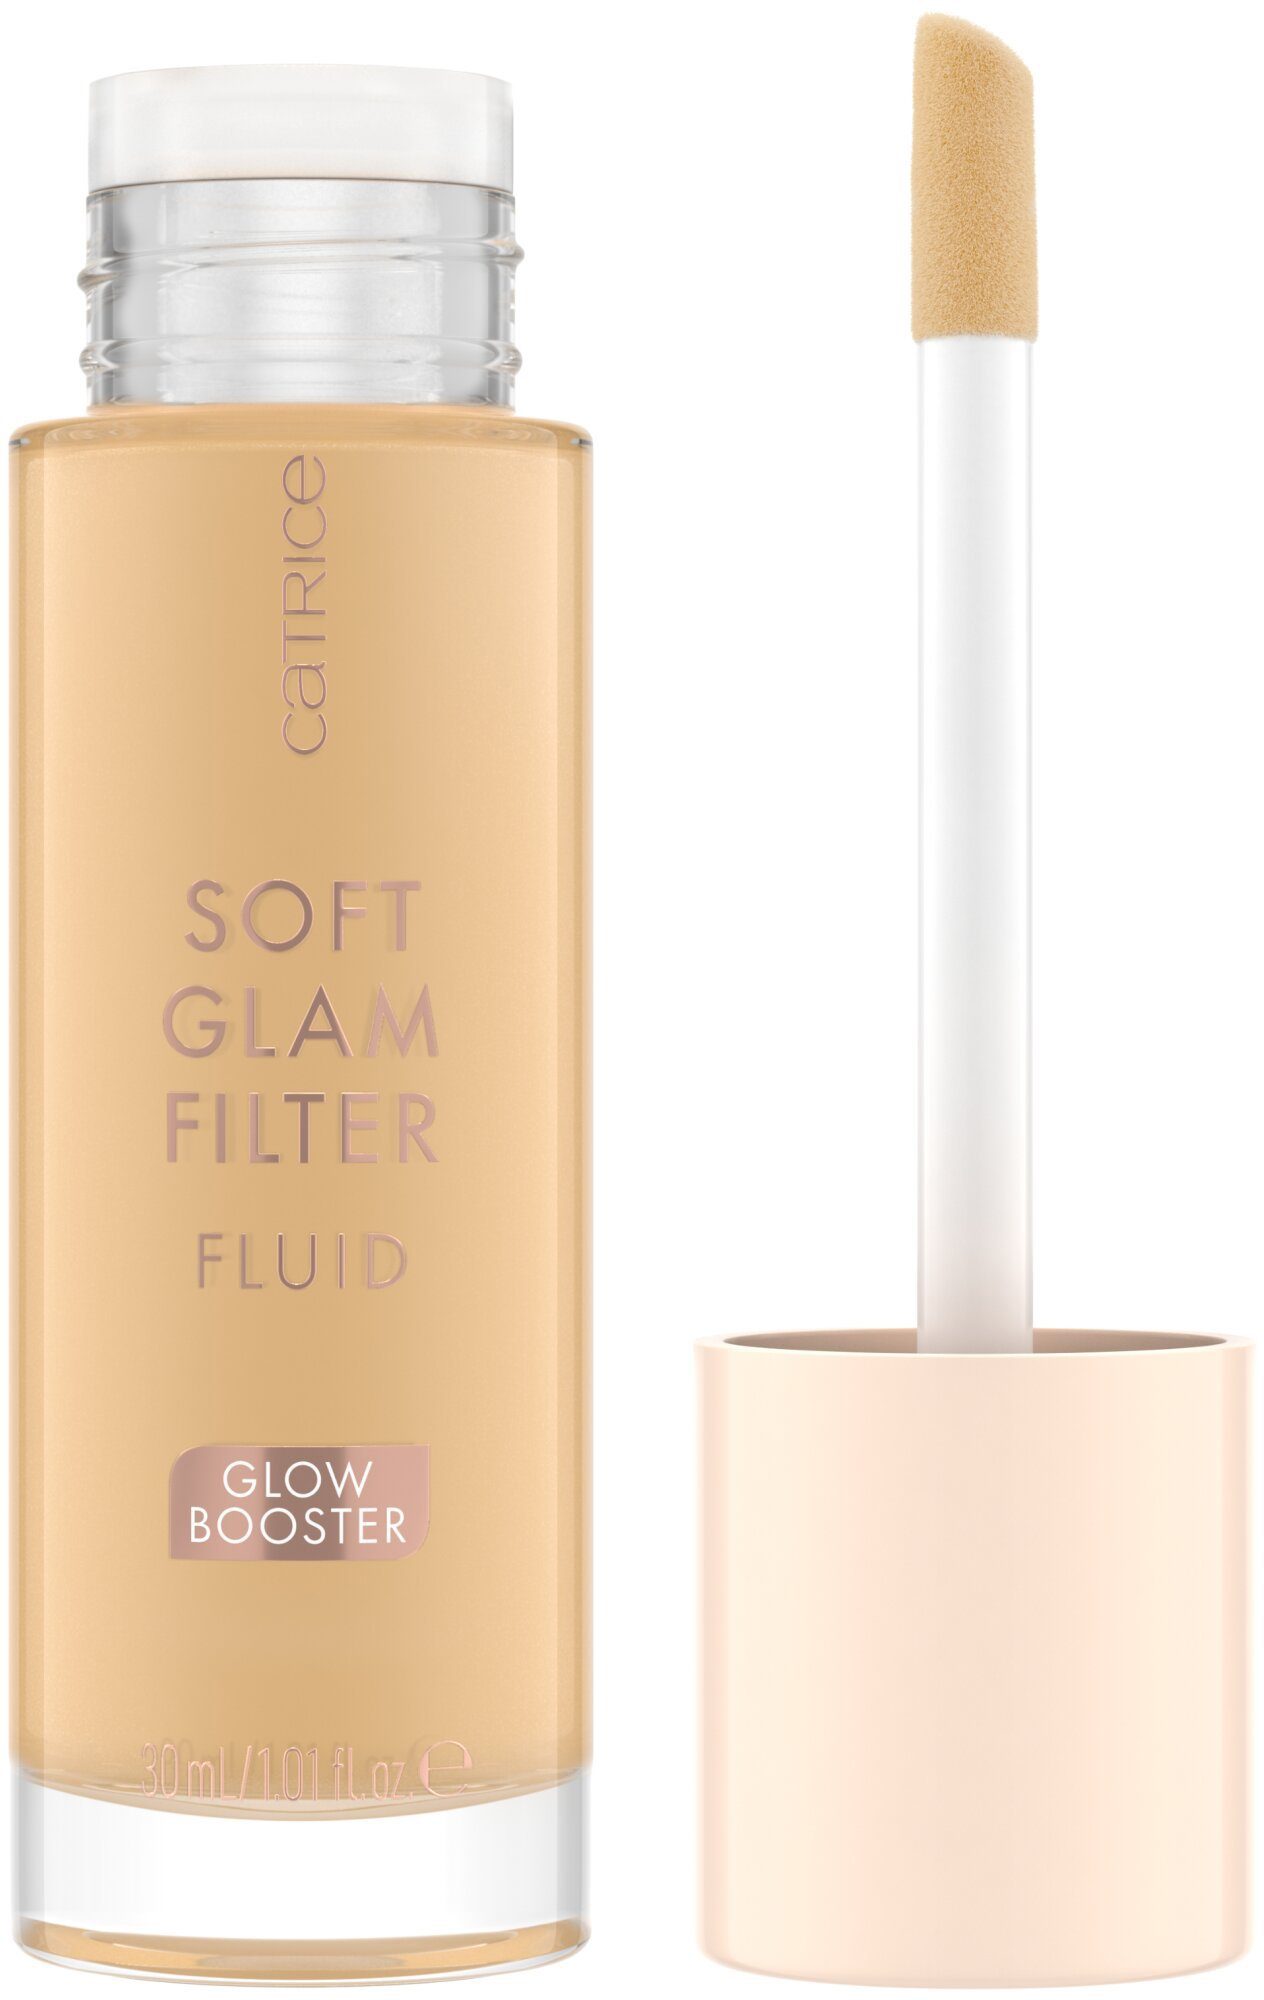 Fluid Filter Primer Glam Soft Catrice